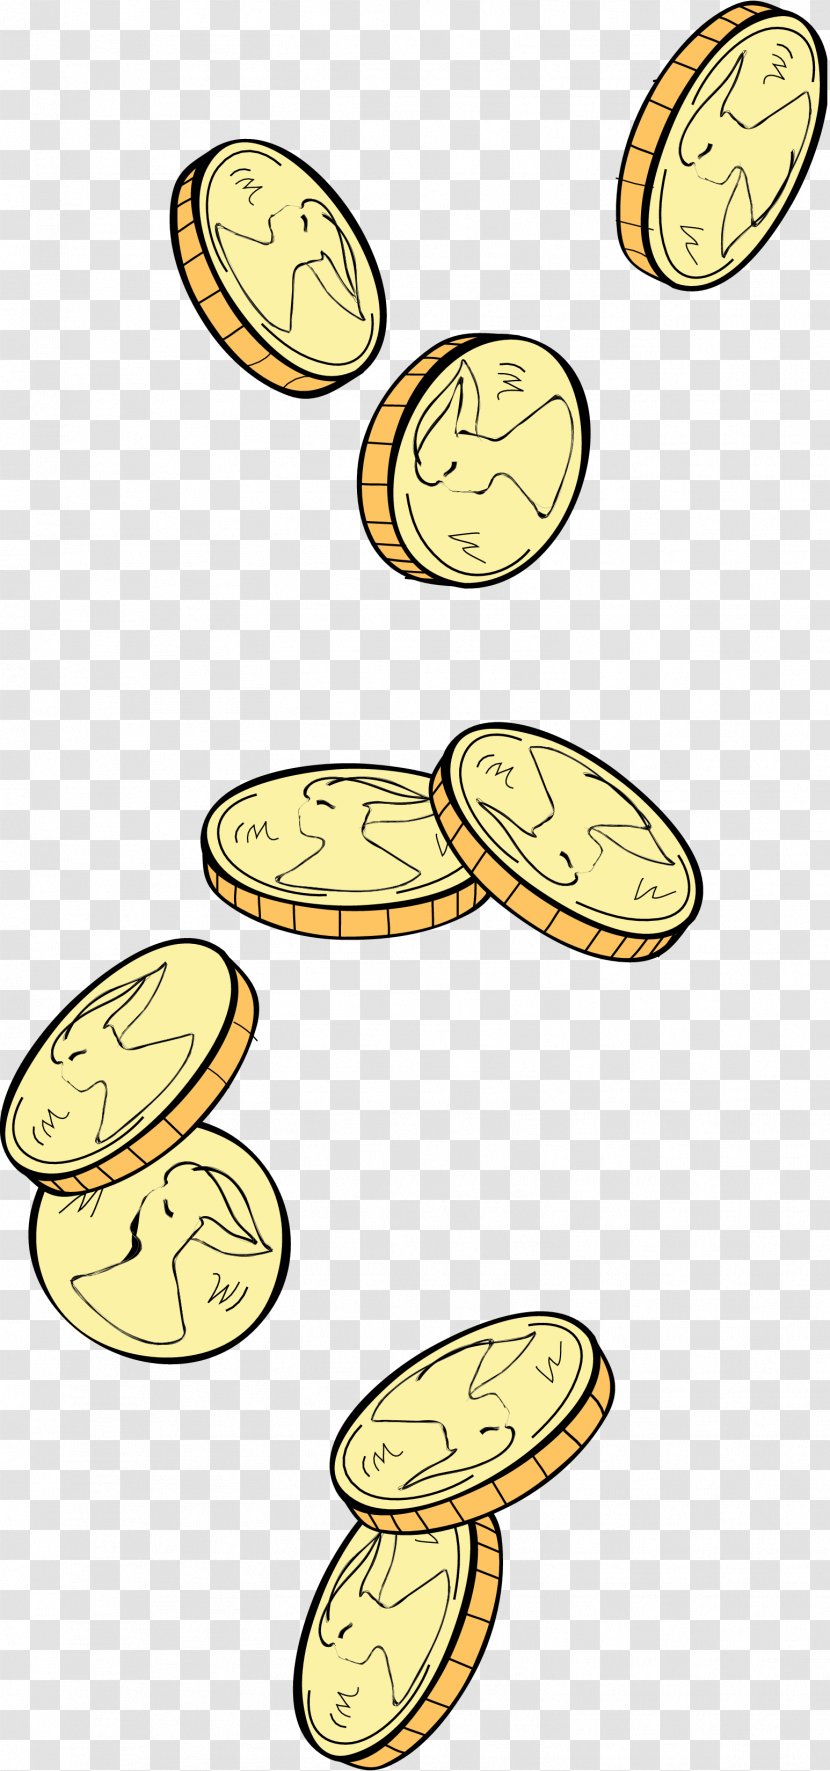 Gold Coin Clip Art - Bullion - Coins Transparent PNG